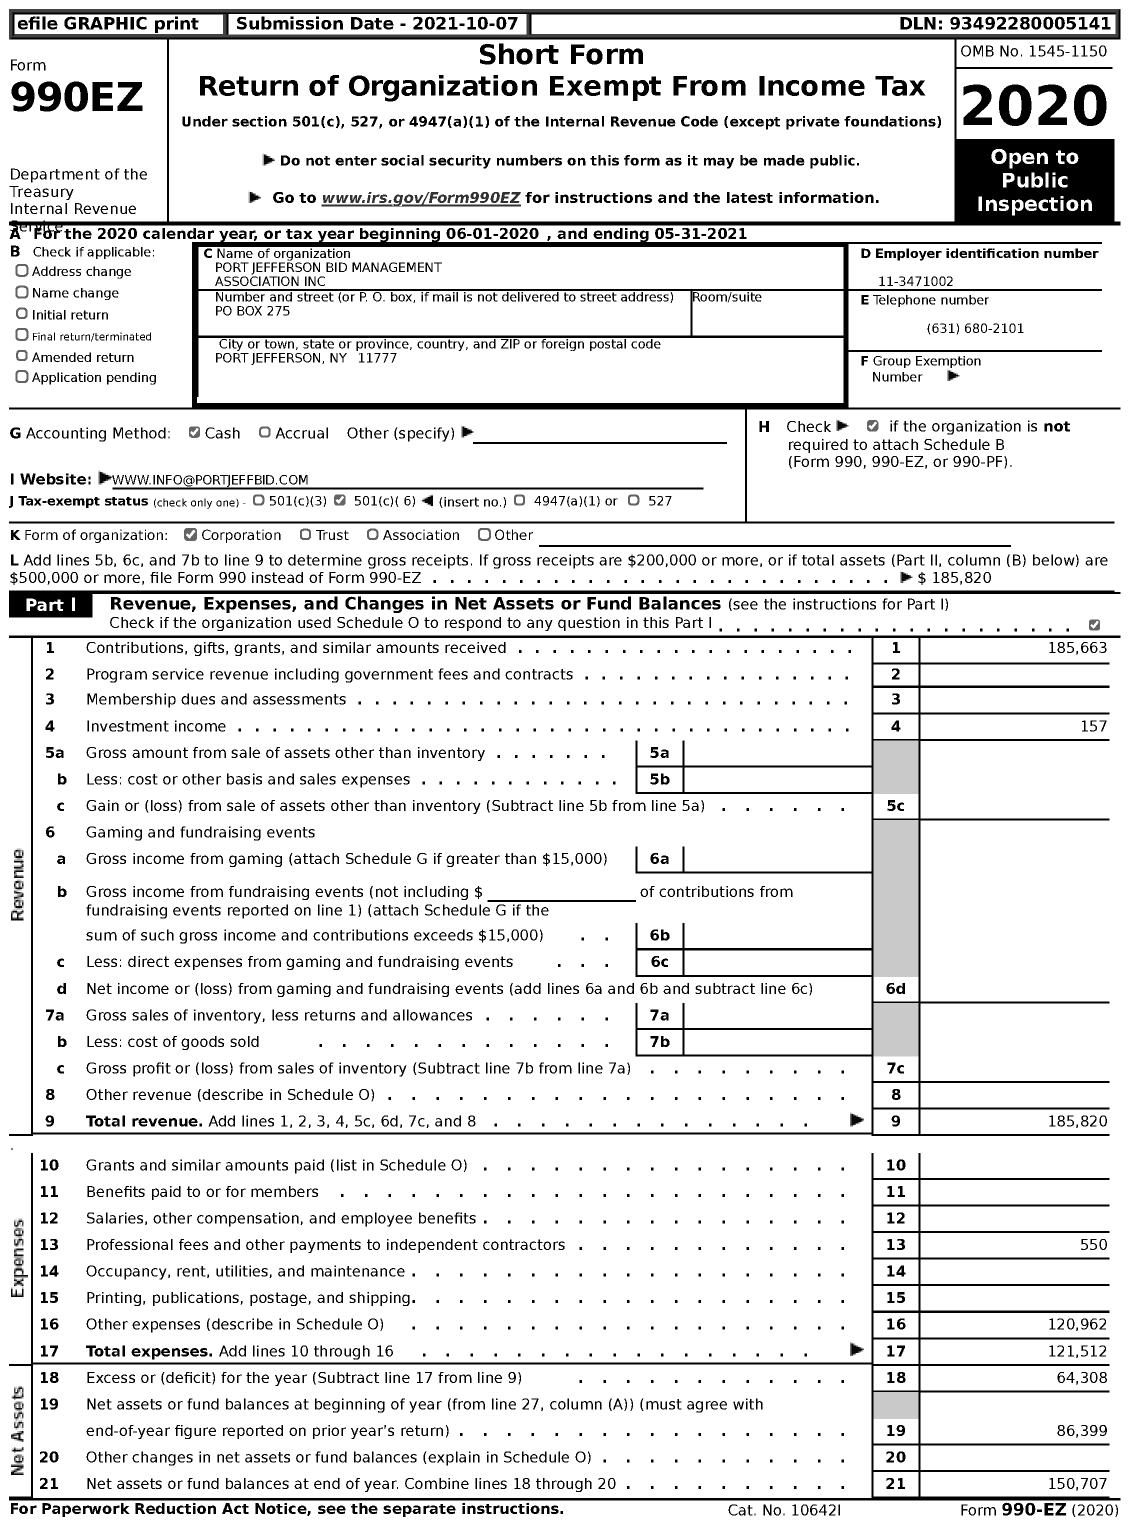 Image of first page of 2020 Form 990EZ for Port Jefferson Bid Management Association